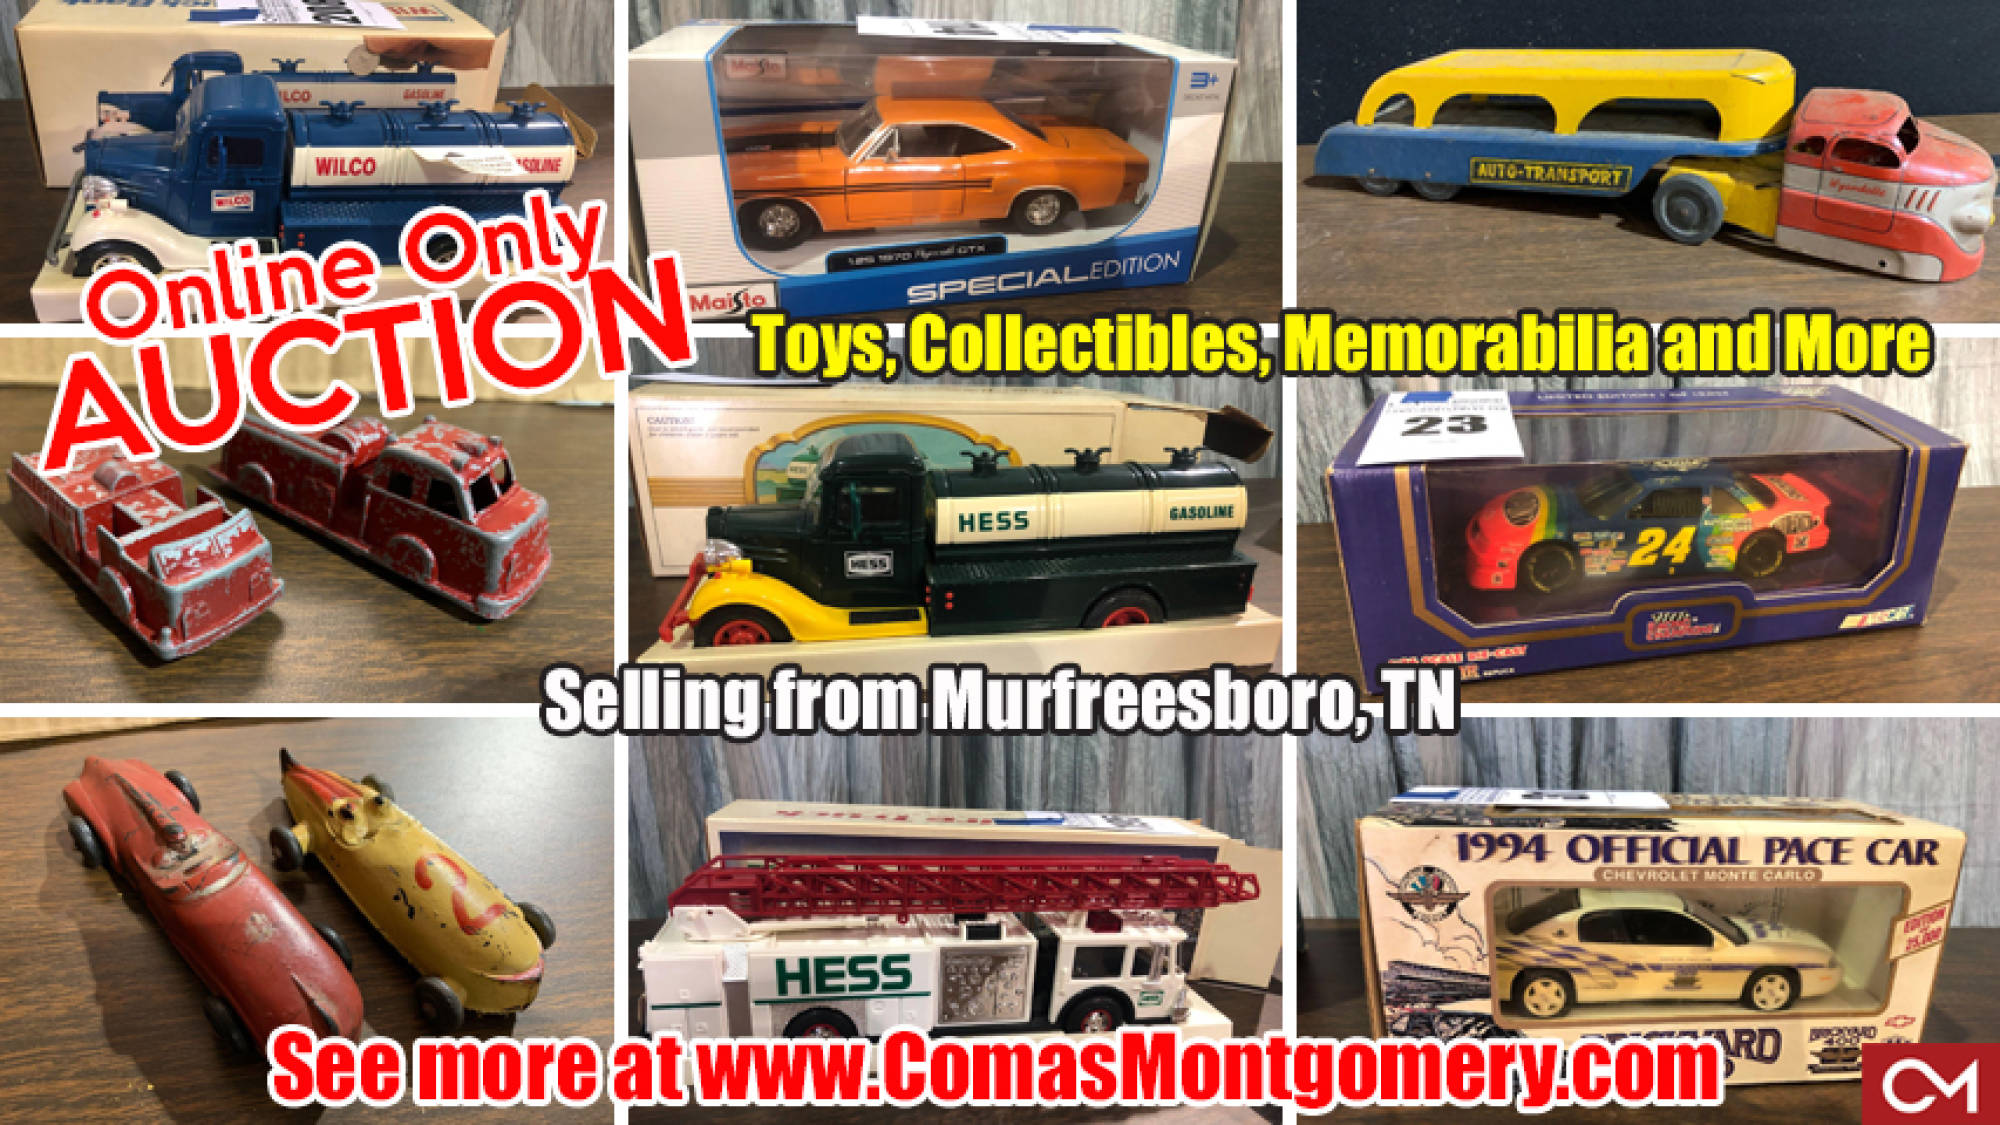 Auction, Antique, Metal, Cars, Trucks, Models, Toys, Collectibles, Memorabilia, Online, Bidding, Murfreesboro, Comas, Montgomery